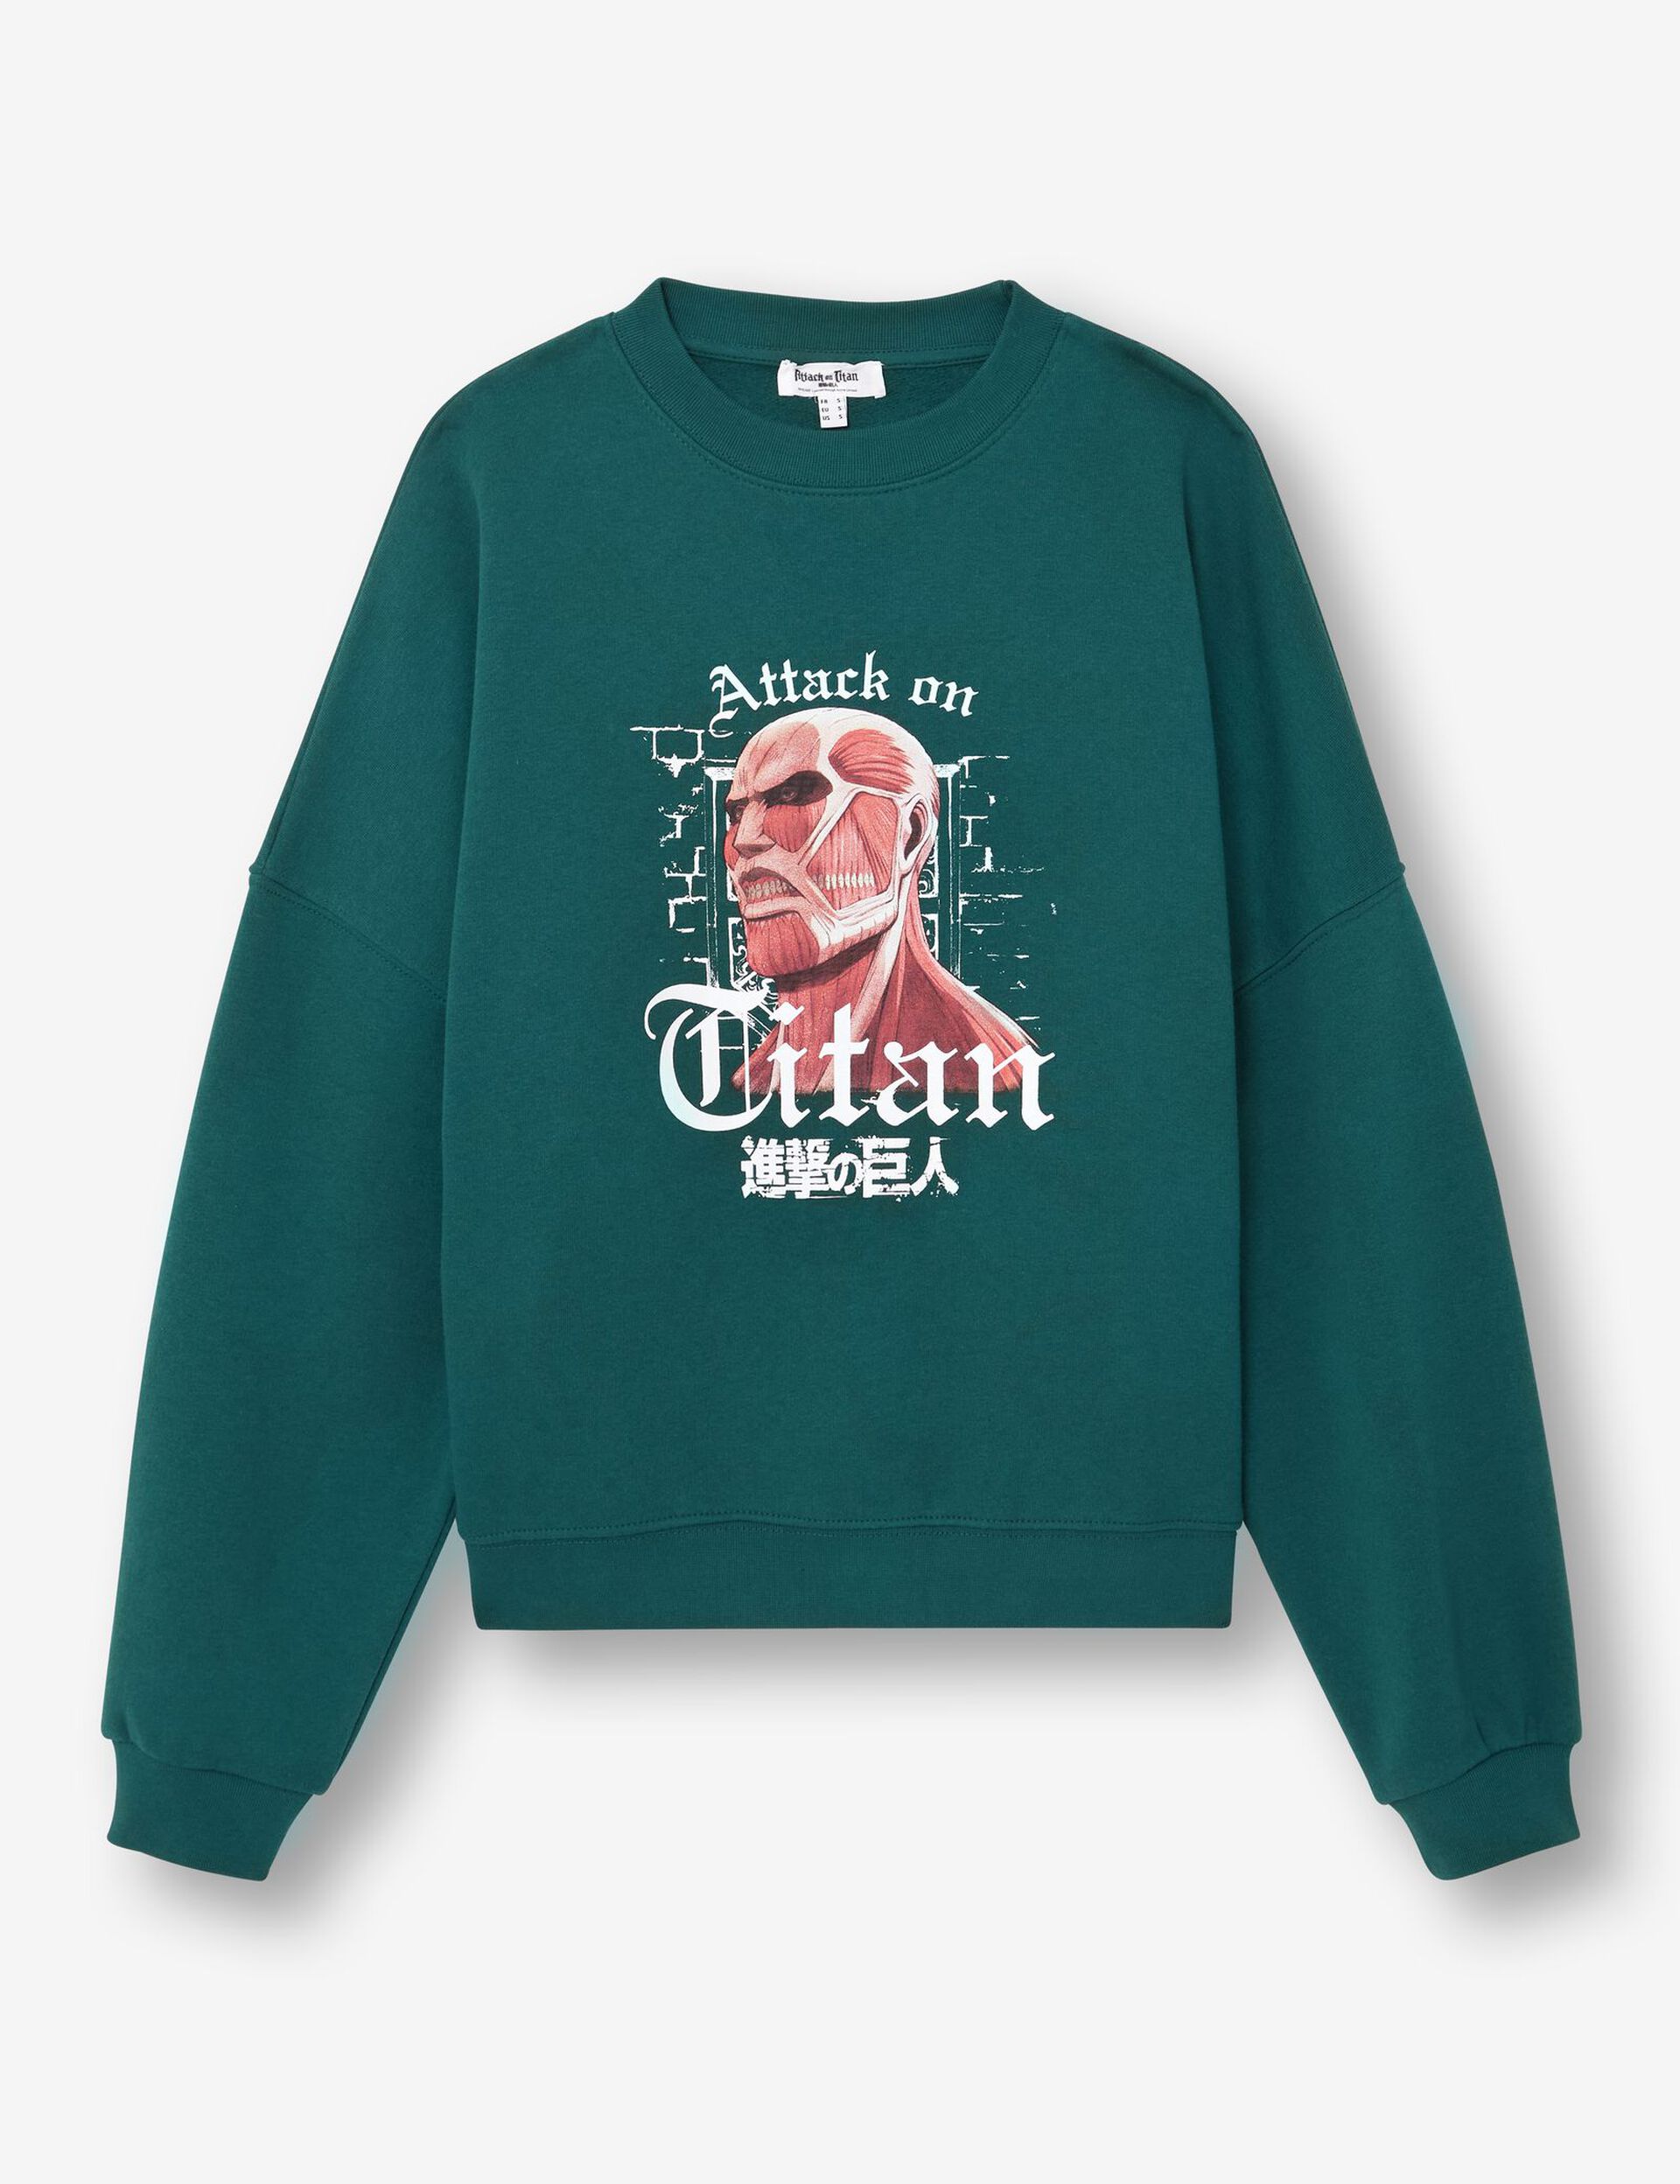 Attack on Titan sweatshirt